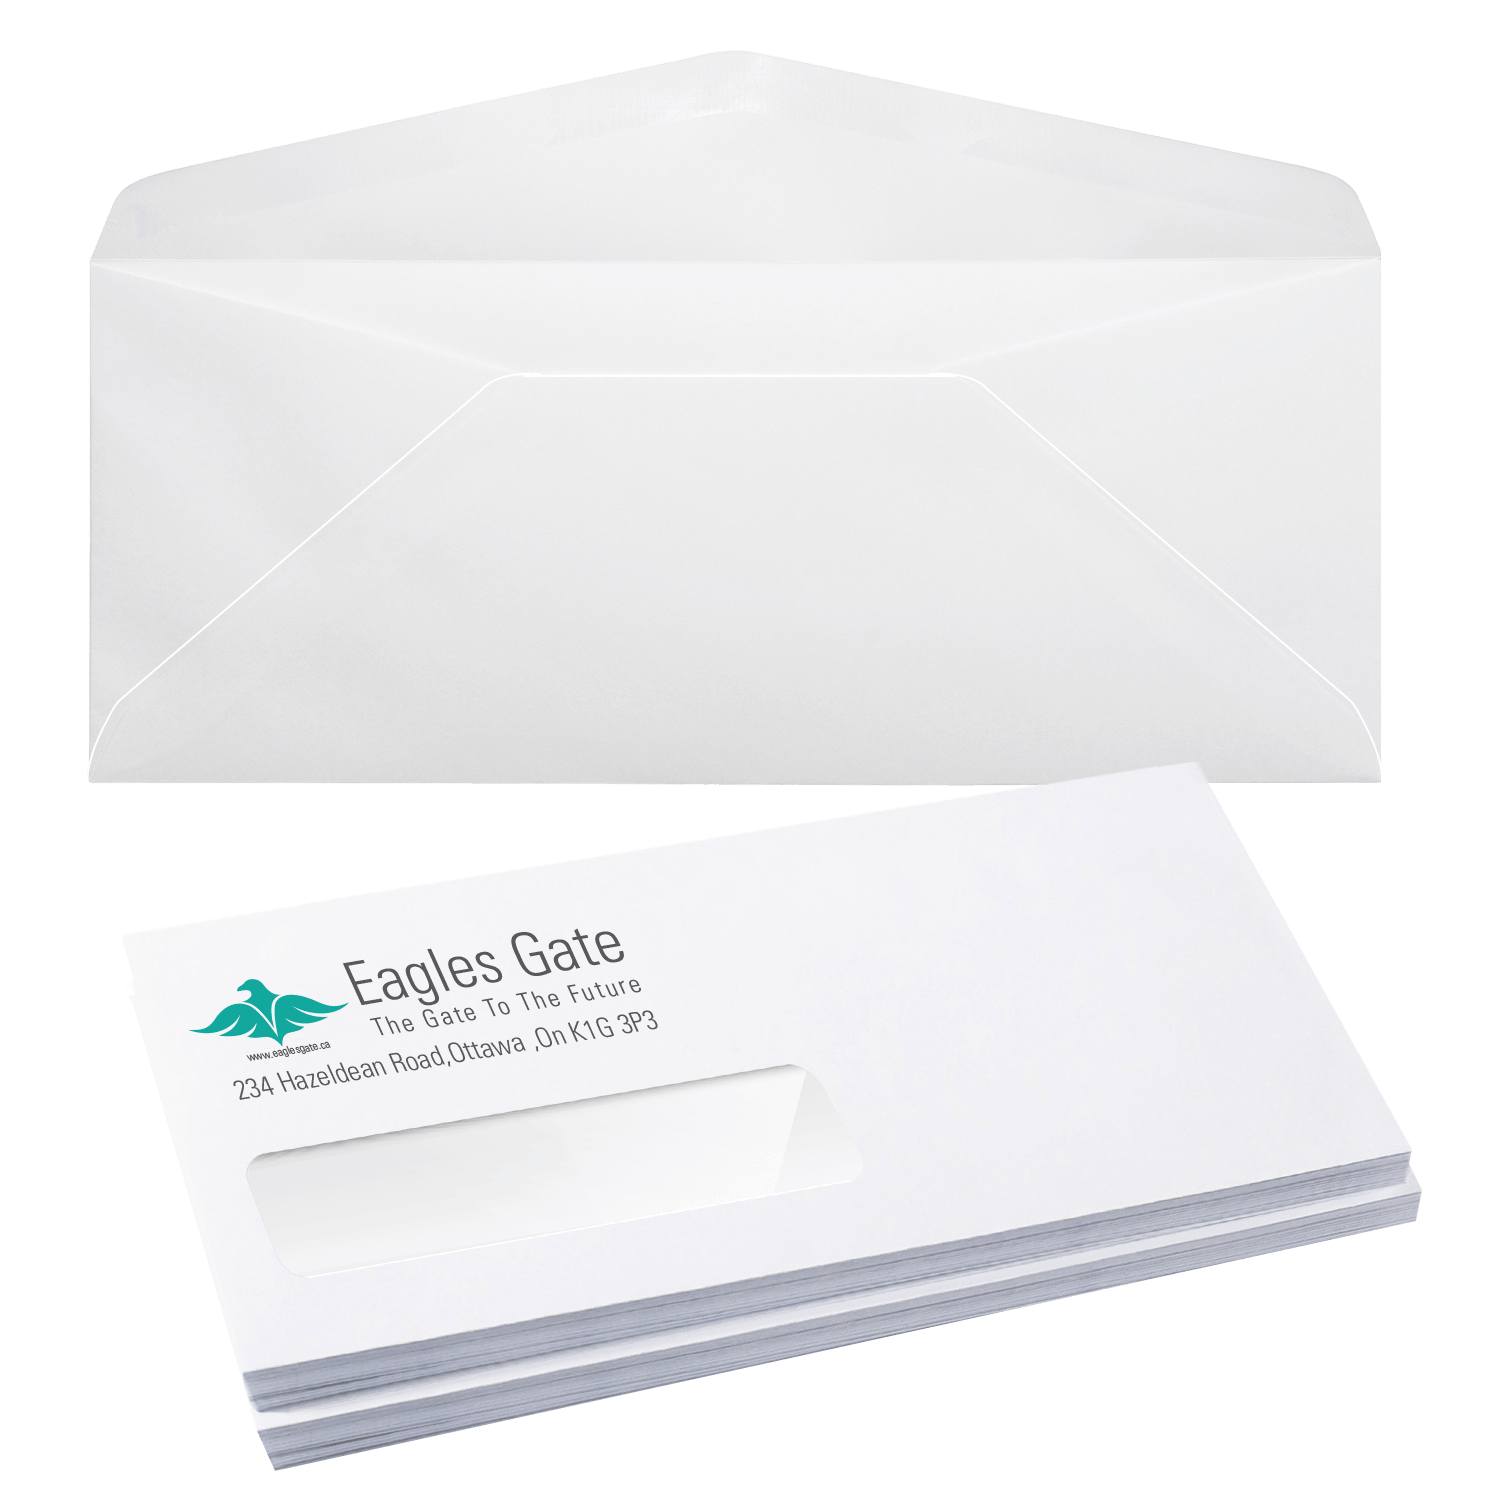 Envelopes - Full-Color Digital Printing